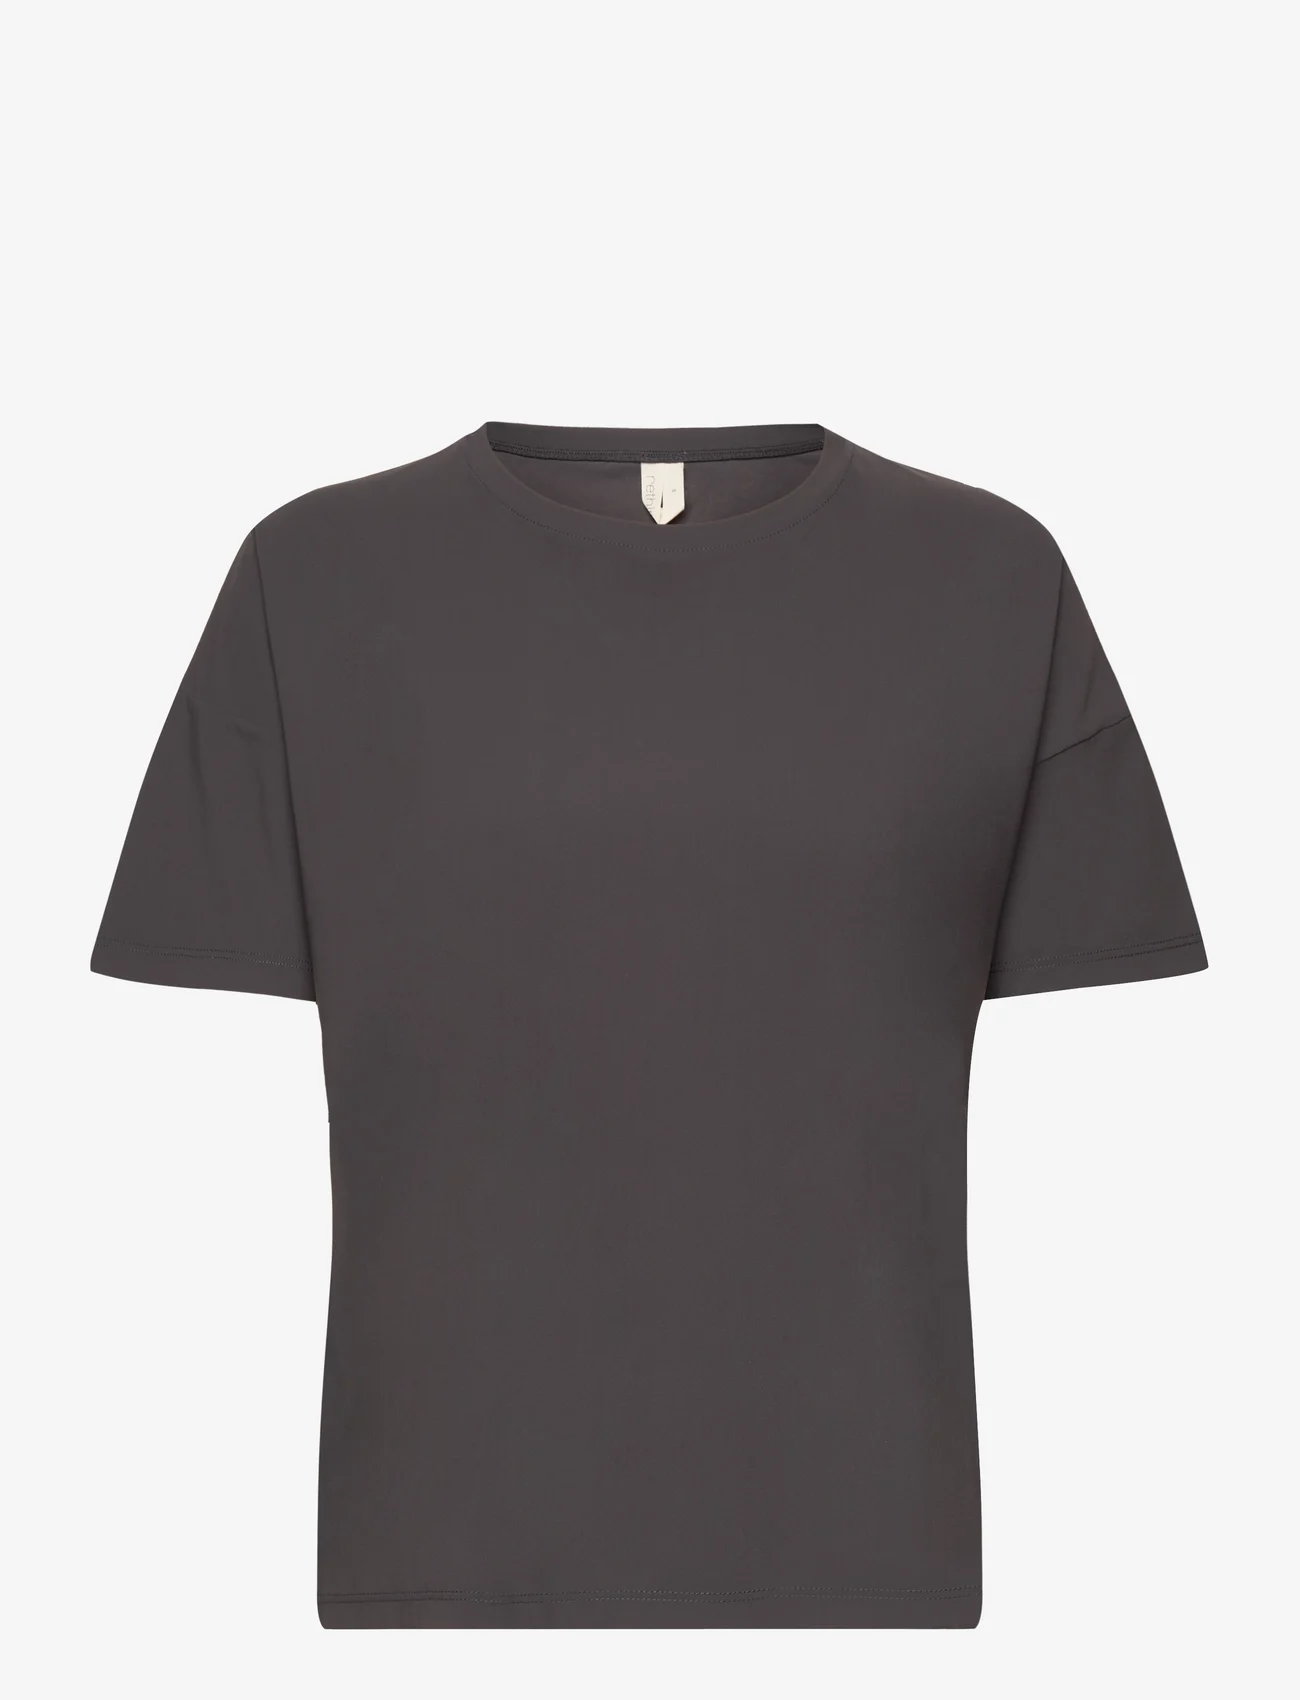 Rethinkit - Vela Loose Tee - t-shirts - almost black - 1